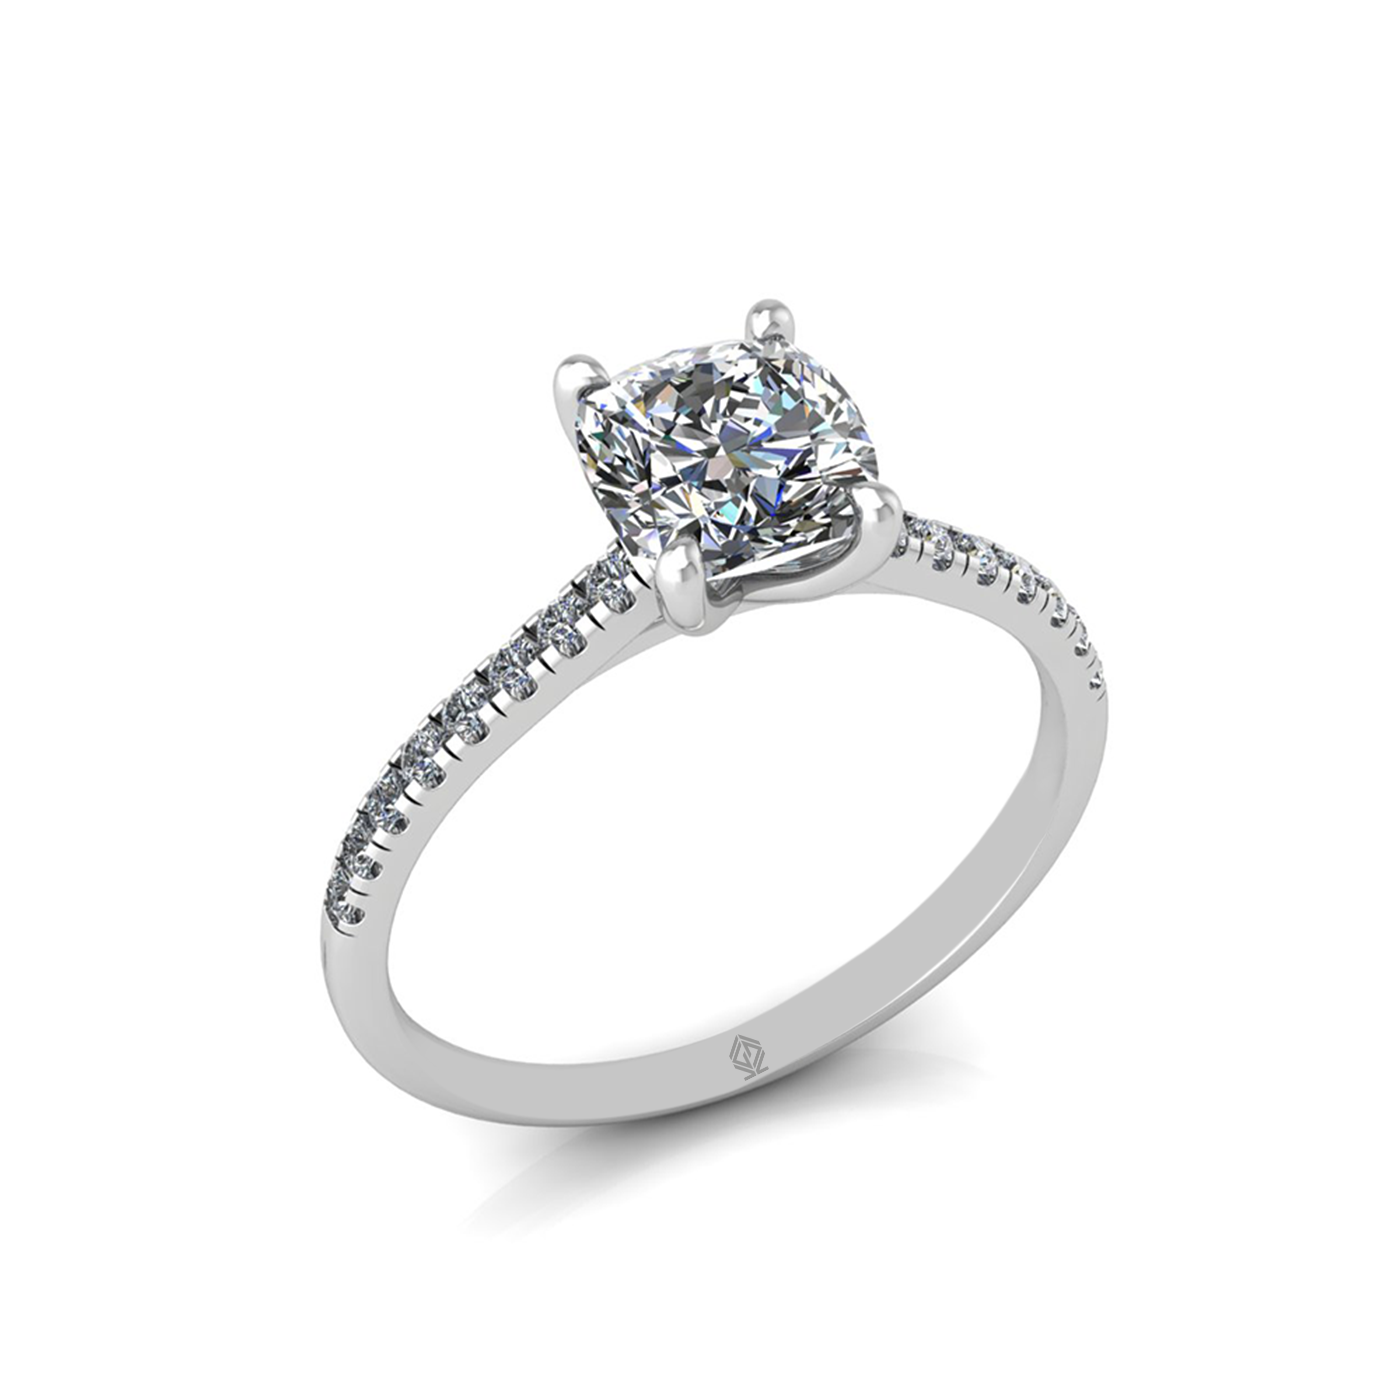 18k white gold 1.20ct 4 prongs cushion cut diamond engagement ring with whisper thin pavÉ set band